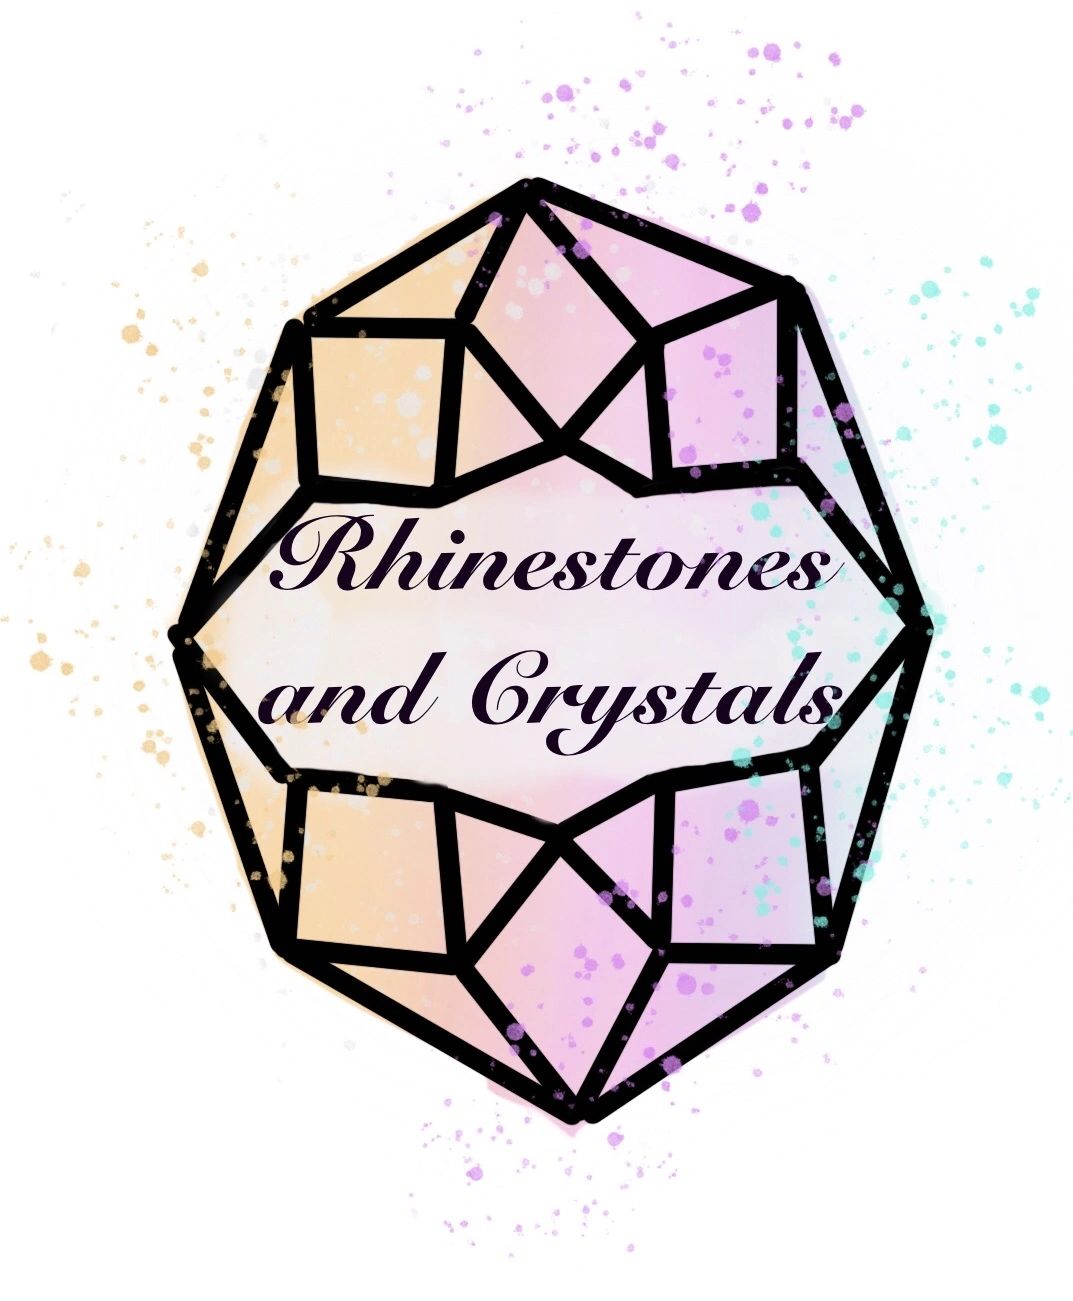 Rhinestones and Crystals - Rhinestones, Dance, Retail